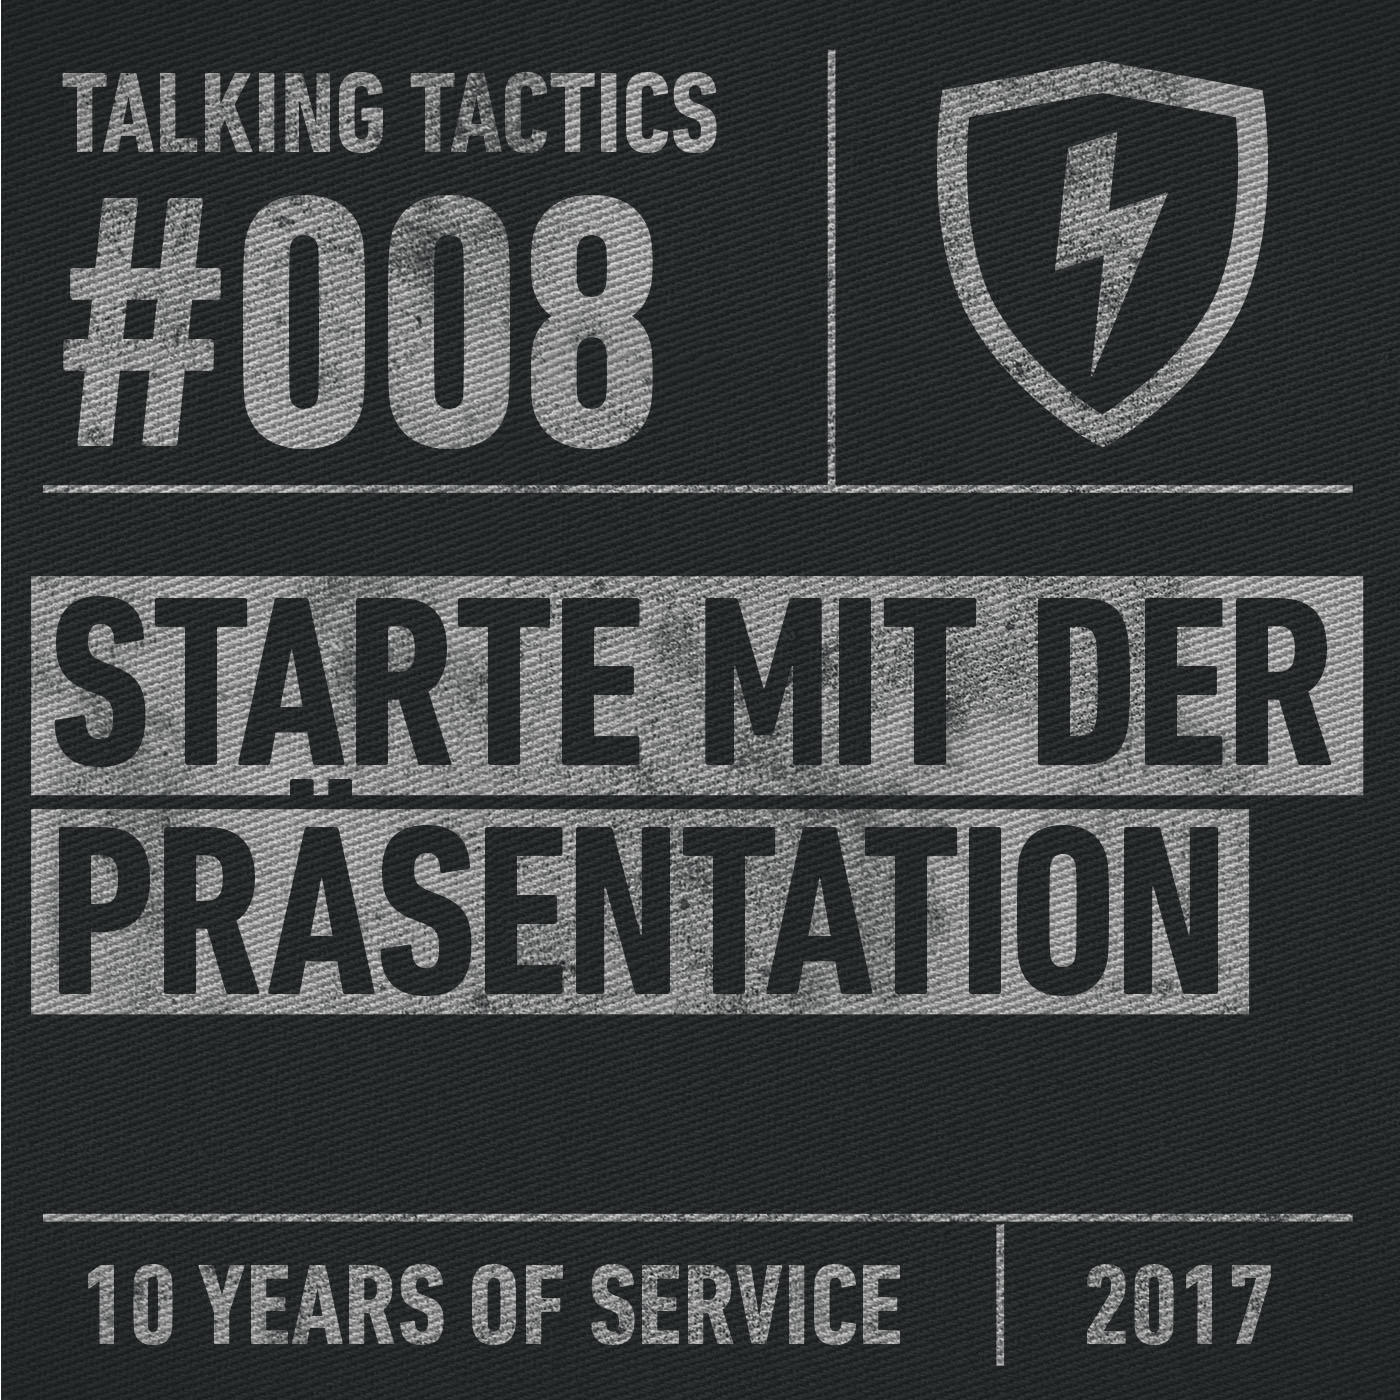 TalkingTactics_8-StarteMitDerPraesentation